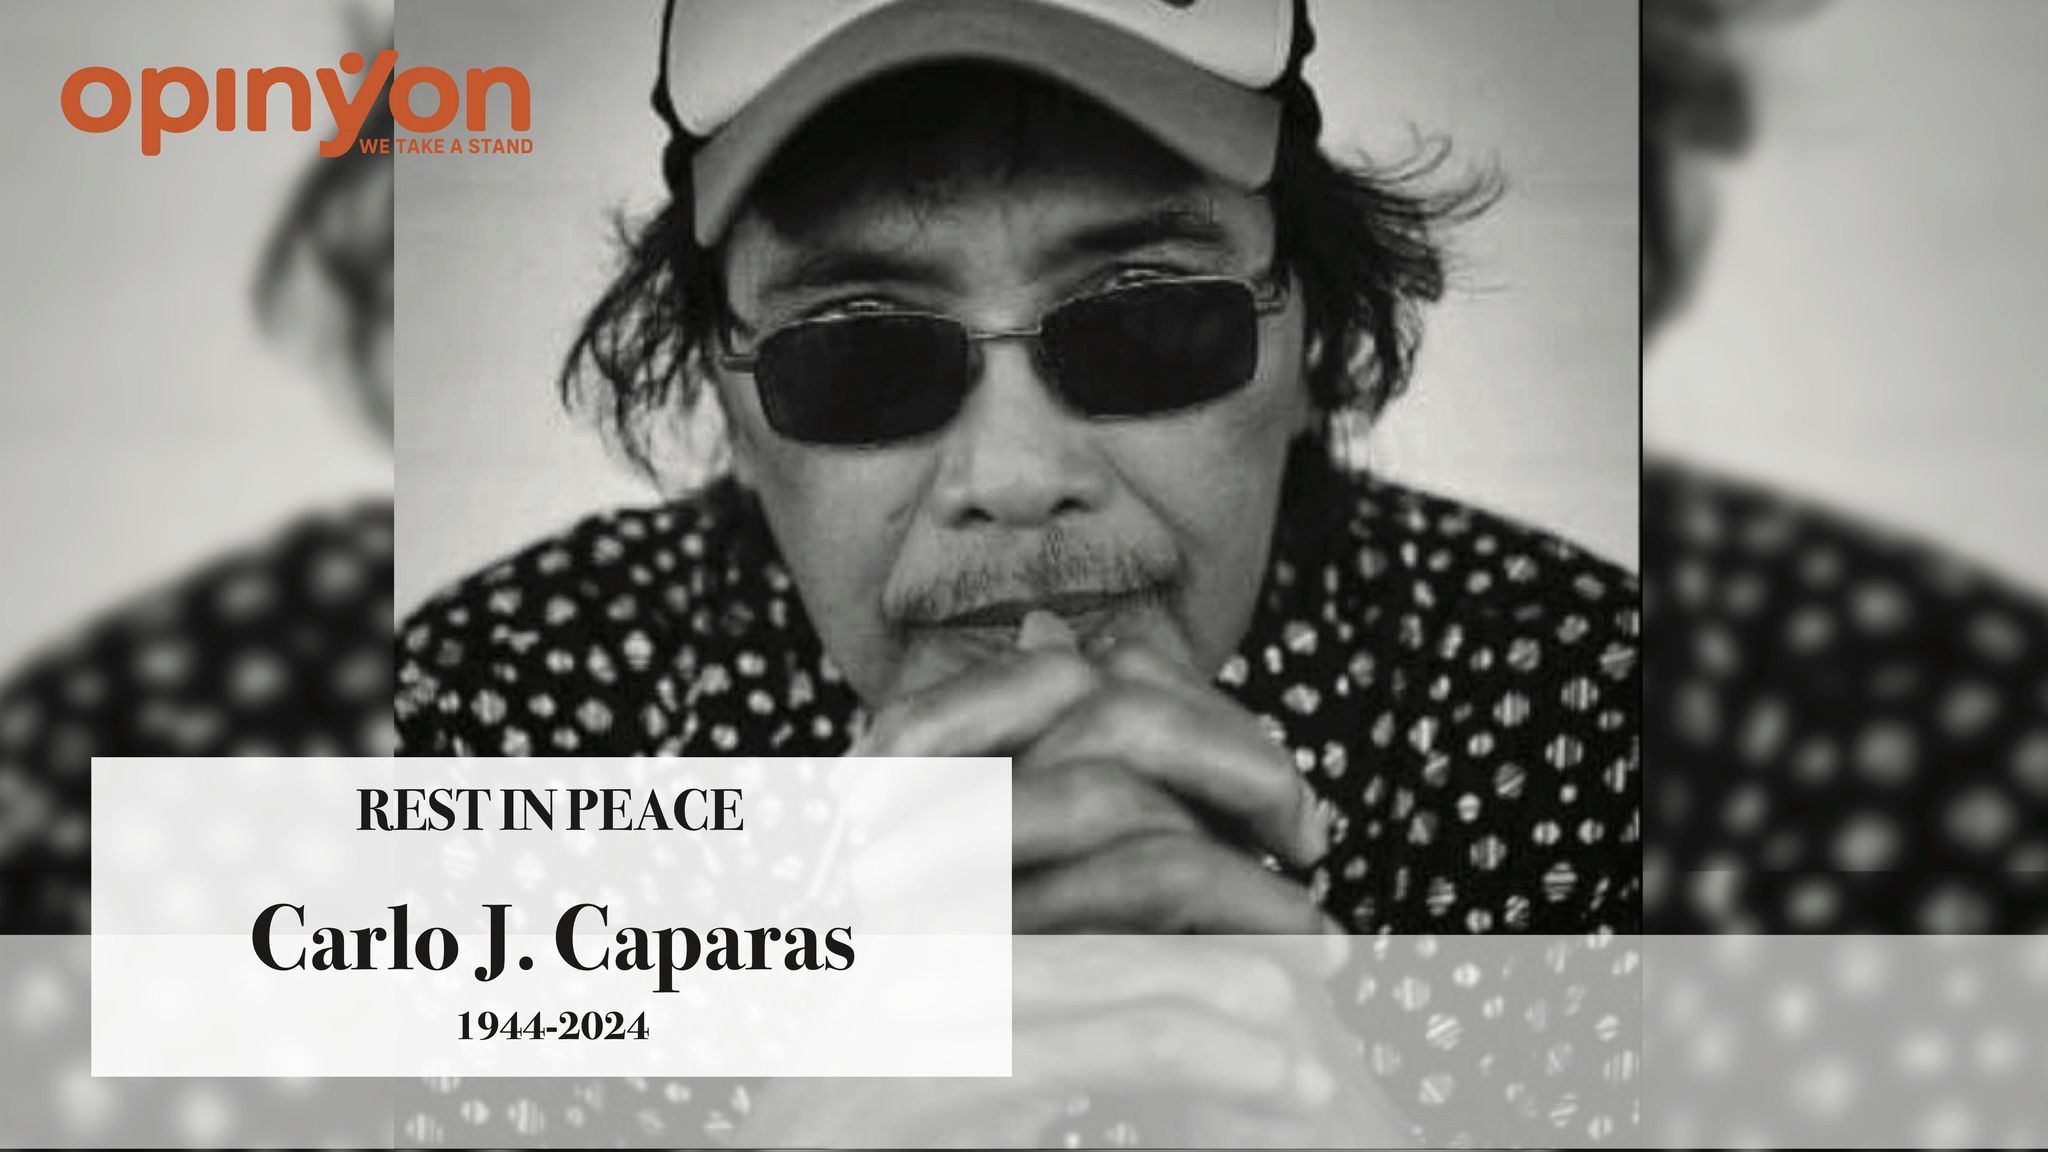 Carlo J. Caparas dies